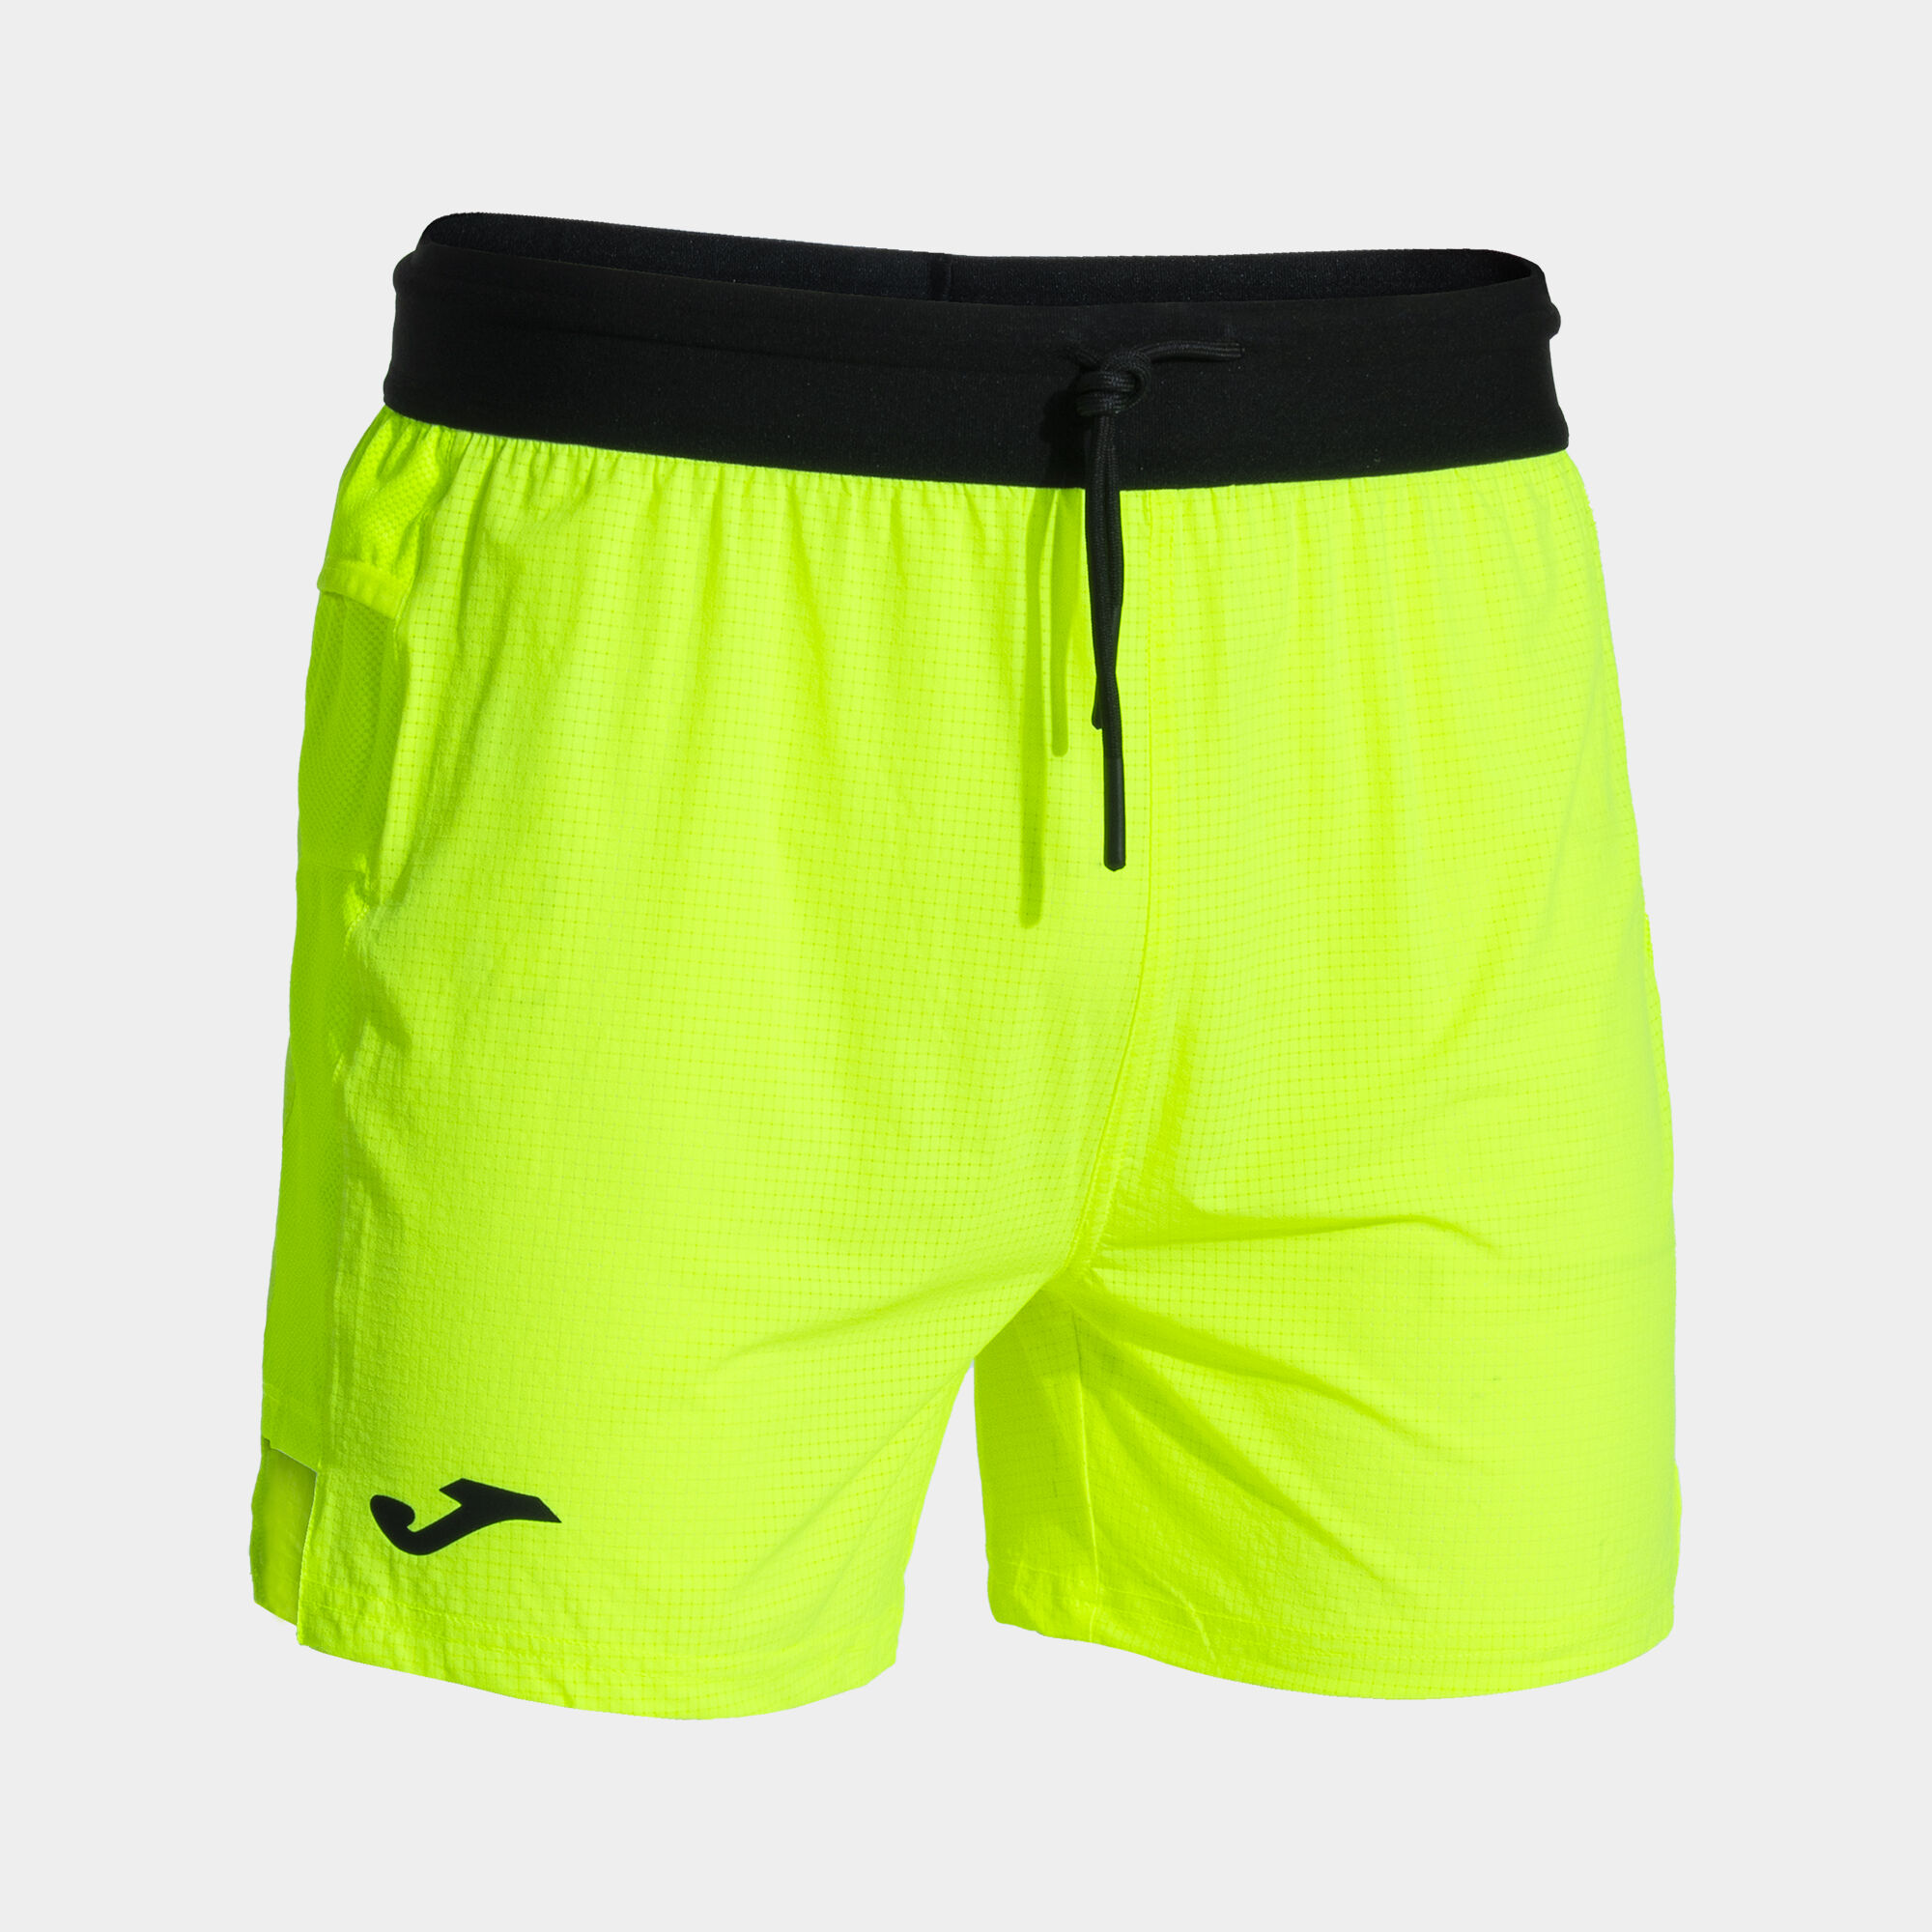 Shorts man R-City fluorescent yellow